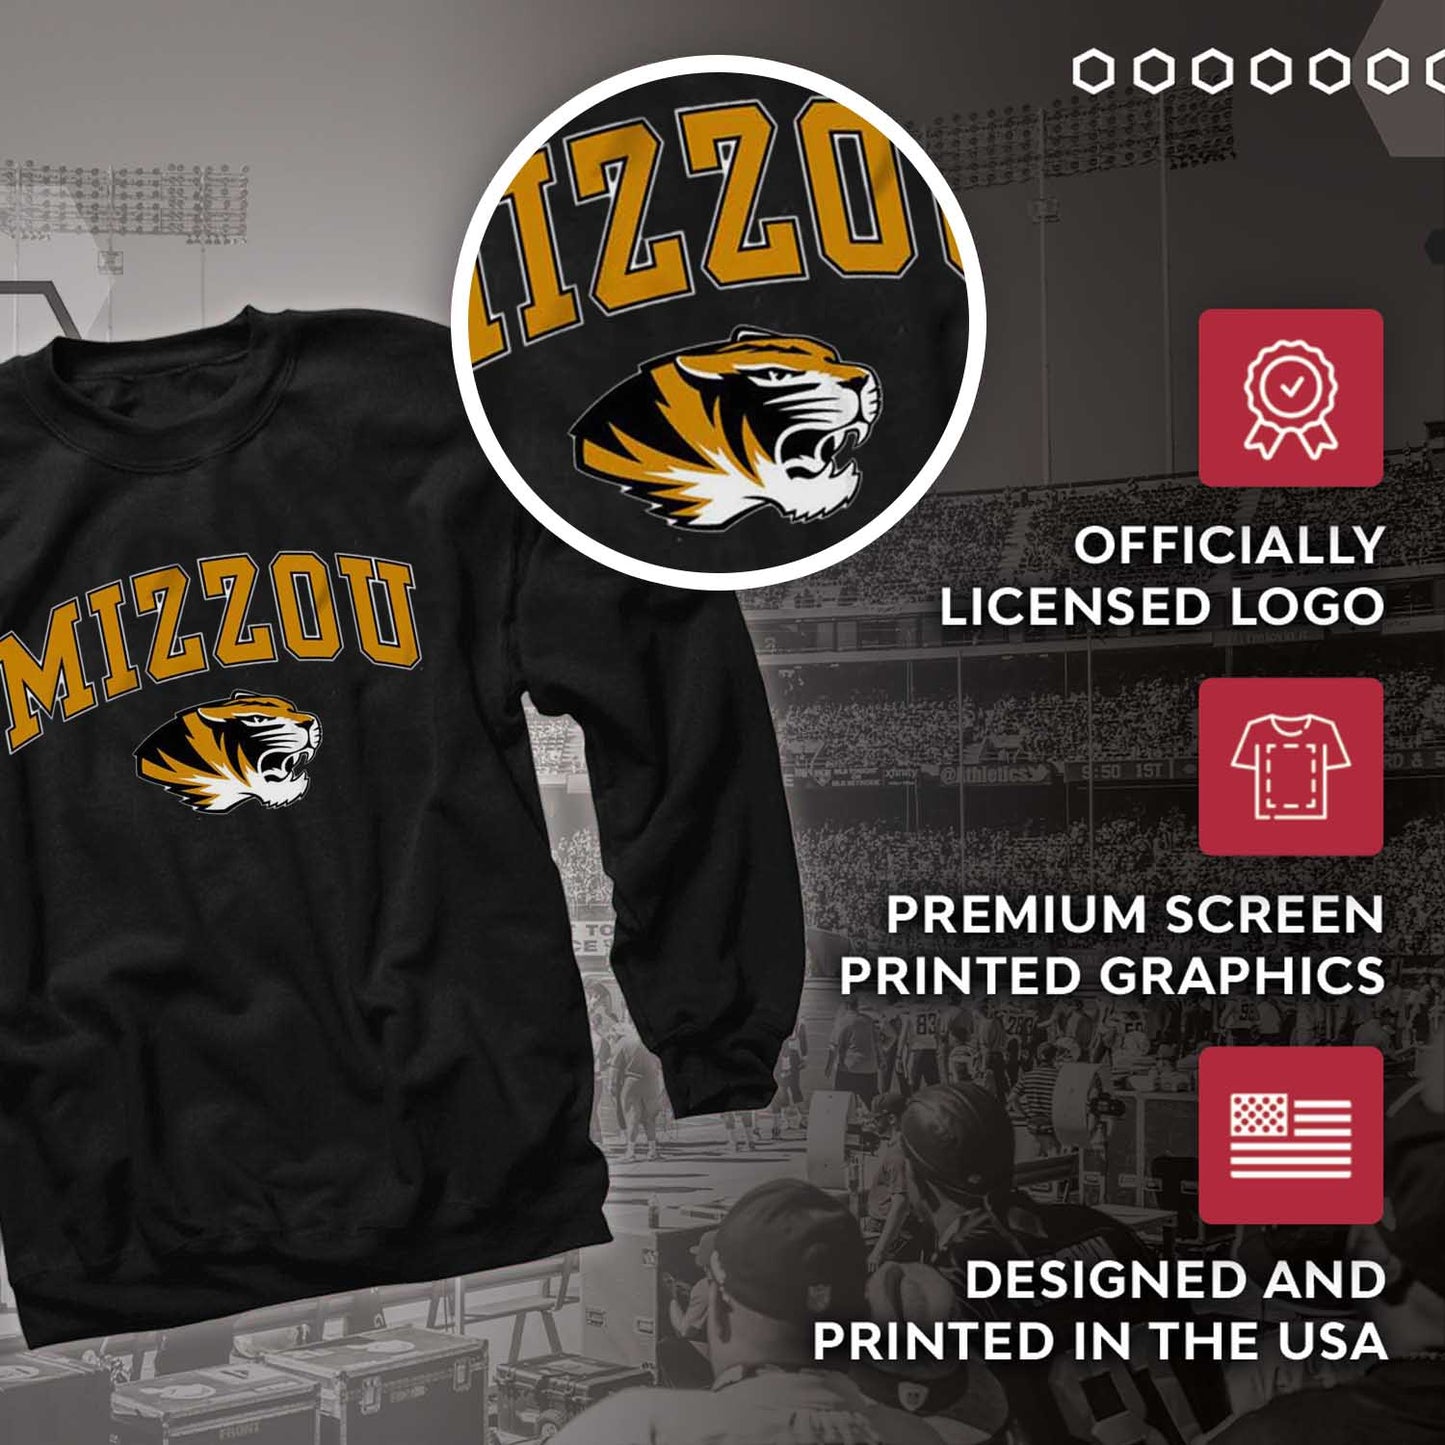 Missouri Tigers Adult Arch & Logo Soft Style Gameday Crewneck Sweatshirt - Black